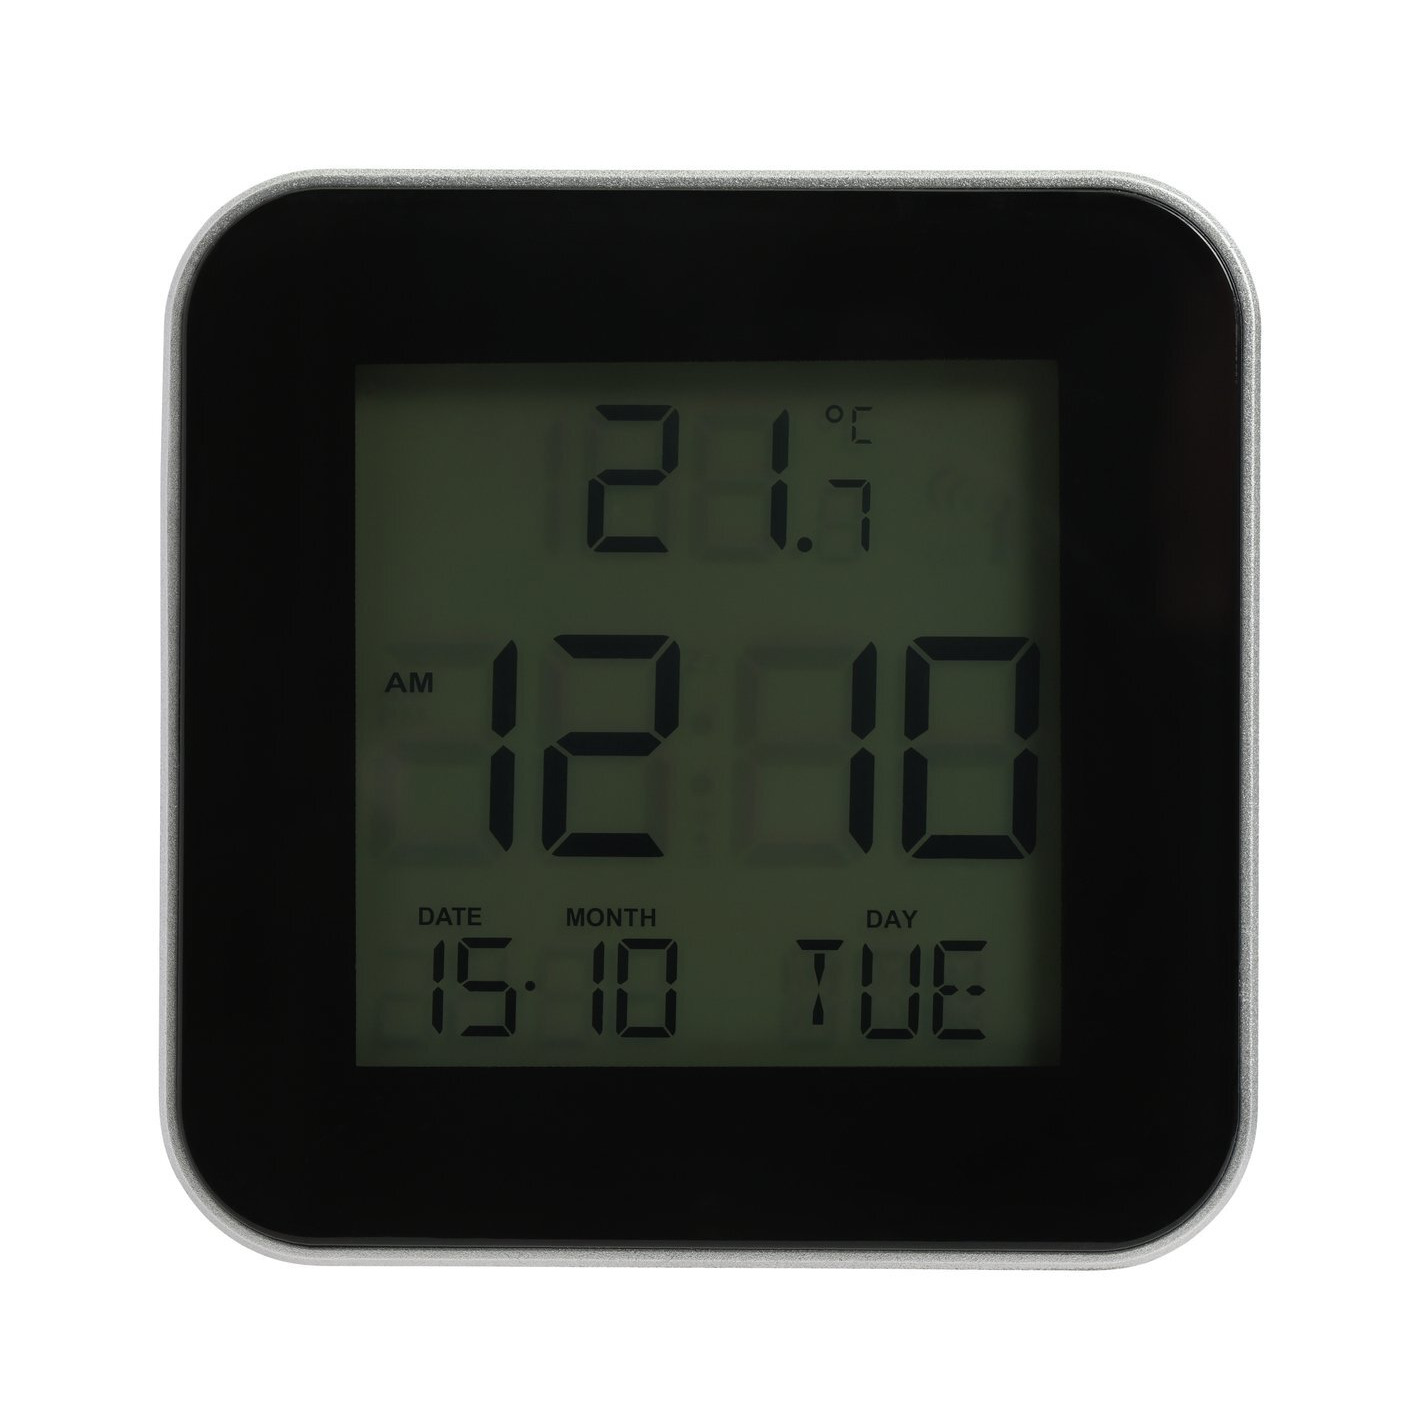 Habitat LCD Display Digital Alarm Clock - Silver - image 1